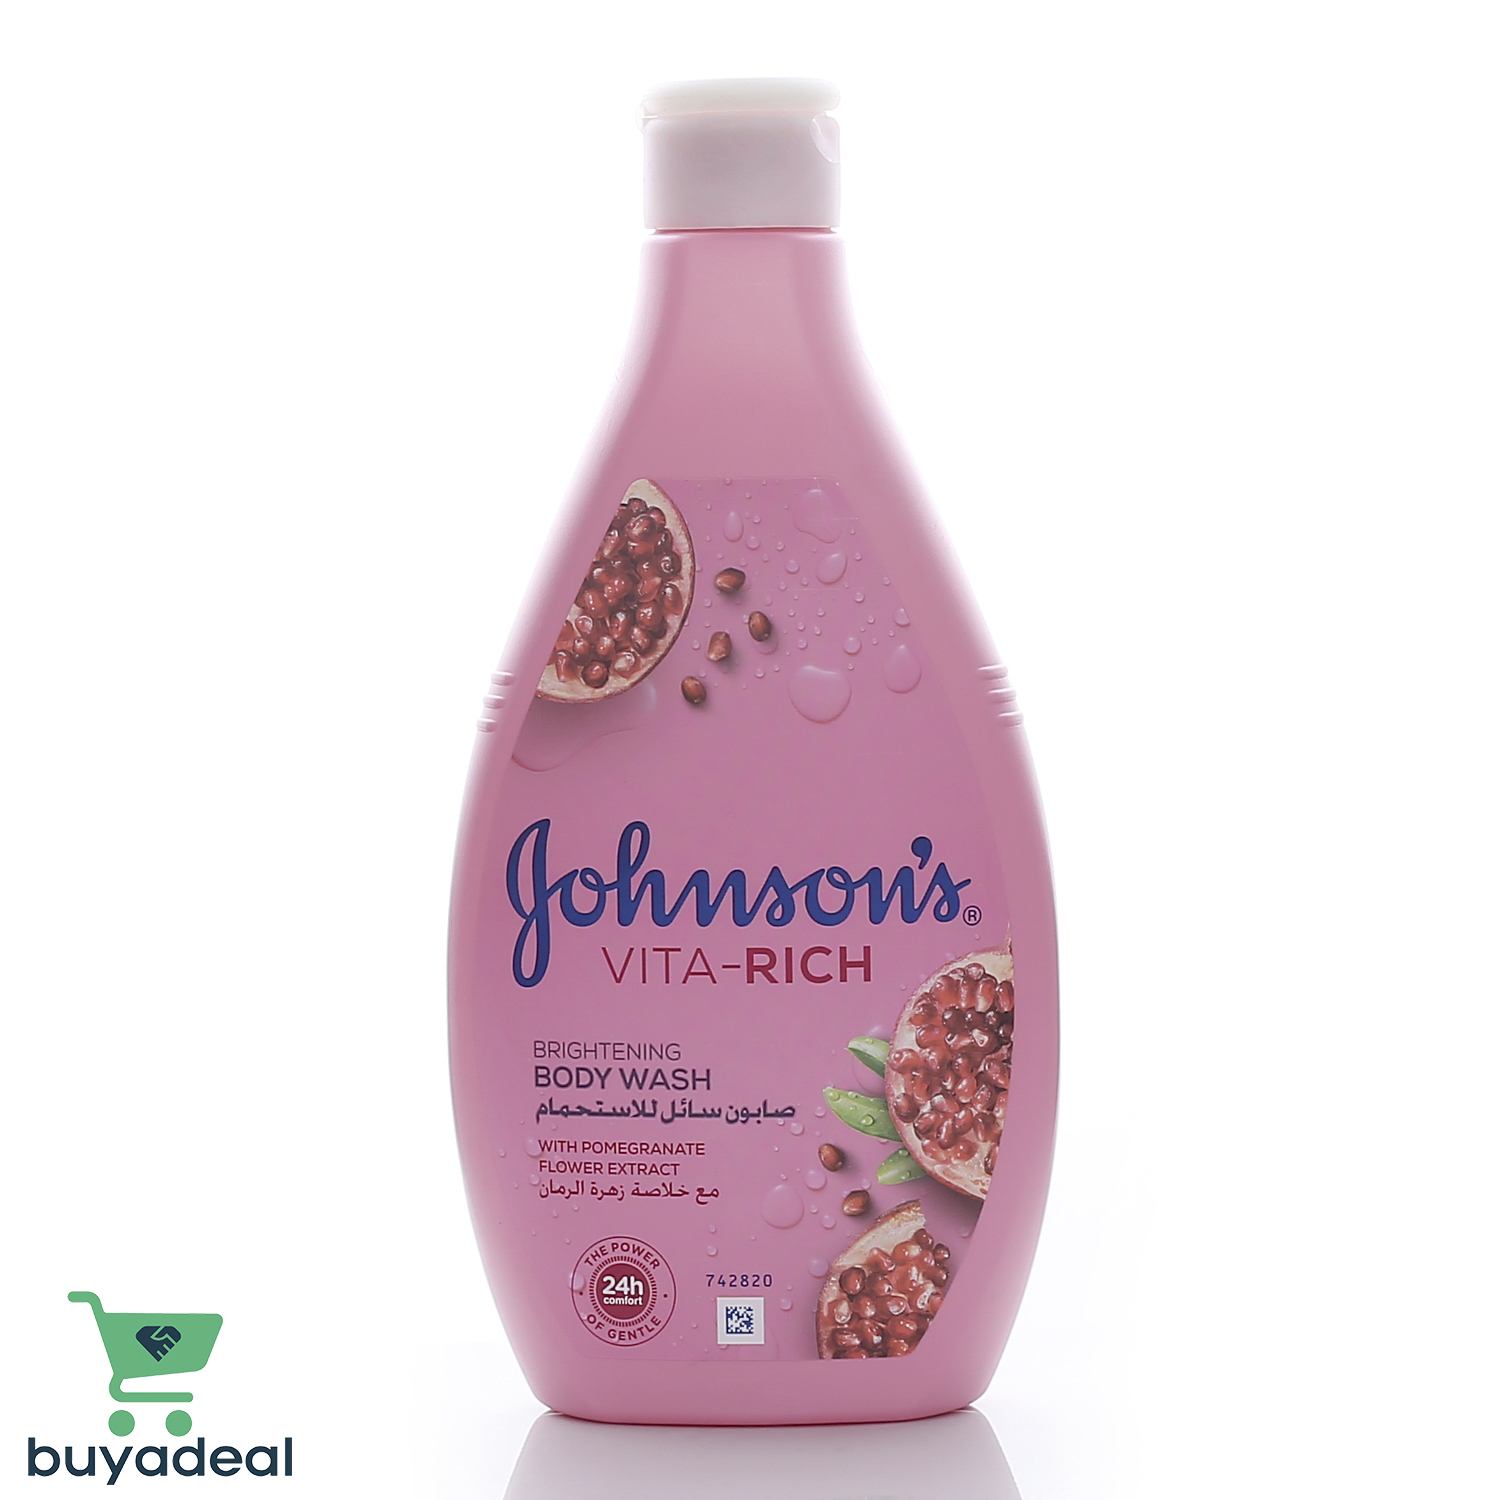 Buyadeal Product Johnson's Body Wash - Vita-Rich, Brightening Pomegranate Flower, 400Ml